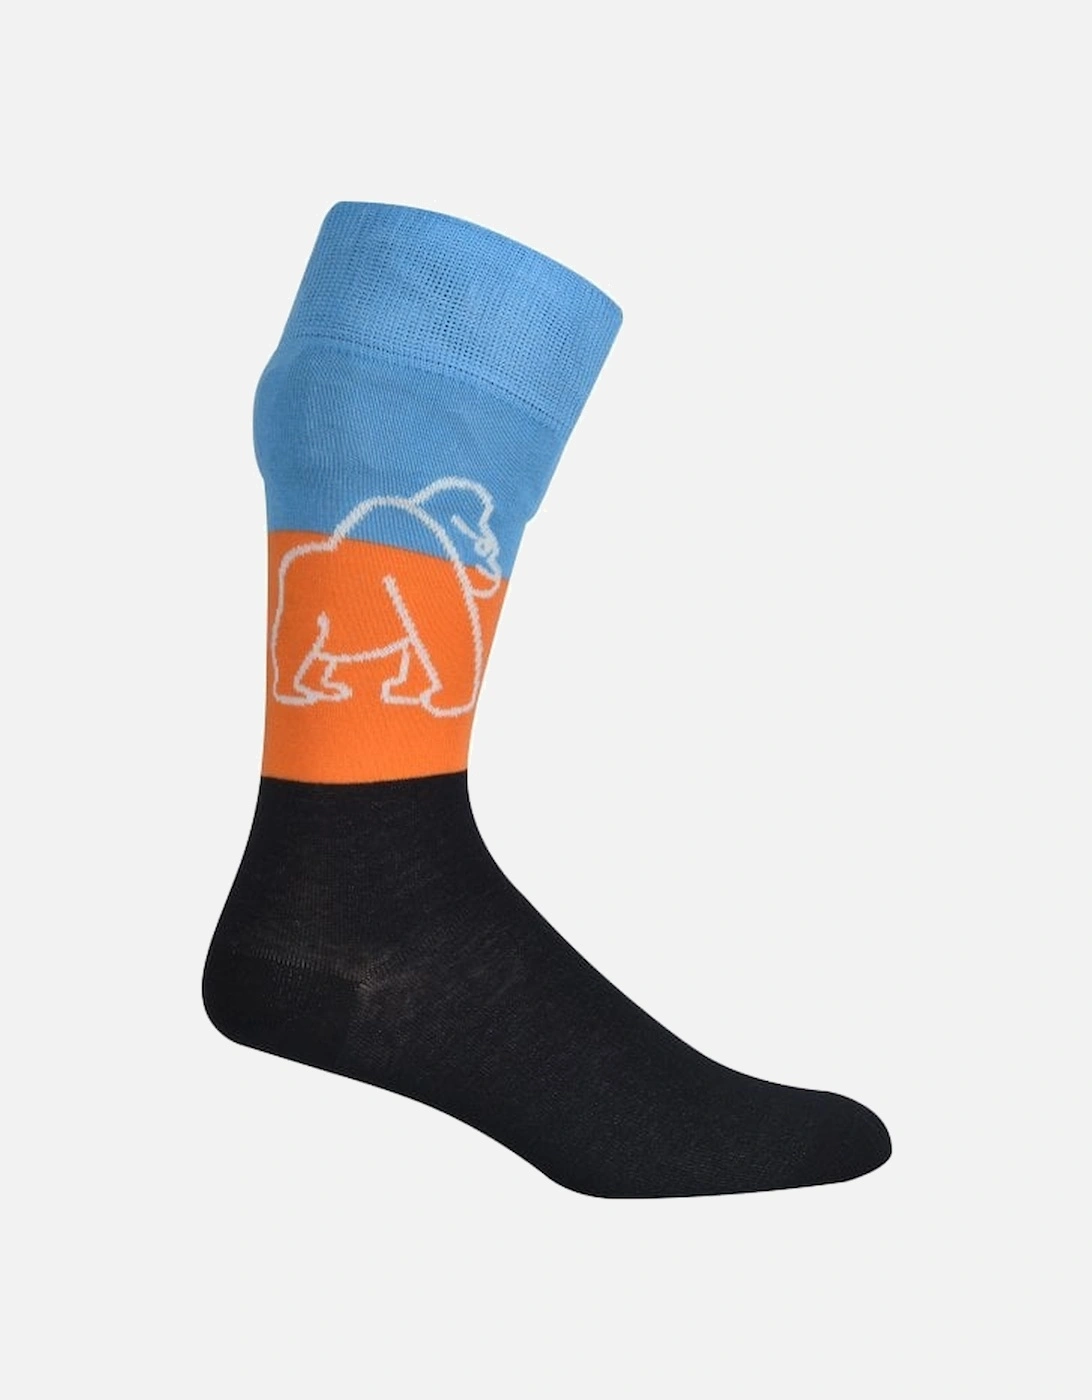 Mountain Gorillas WWF Socks, Black/Orange/Blue